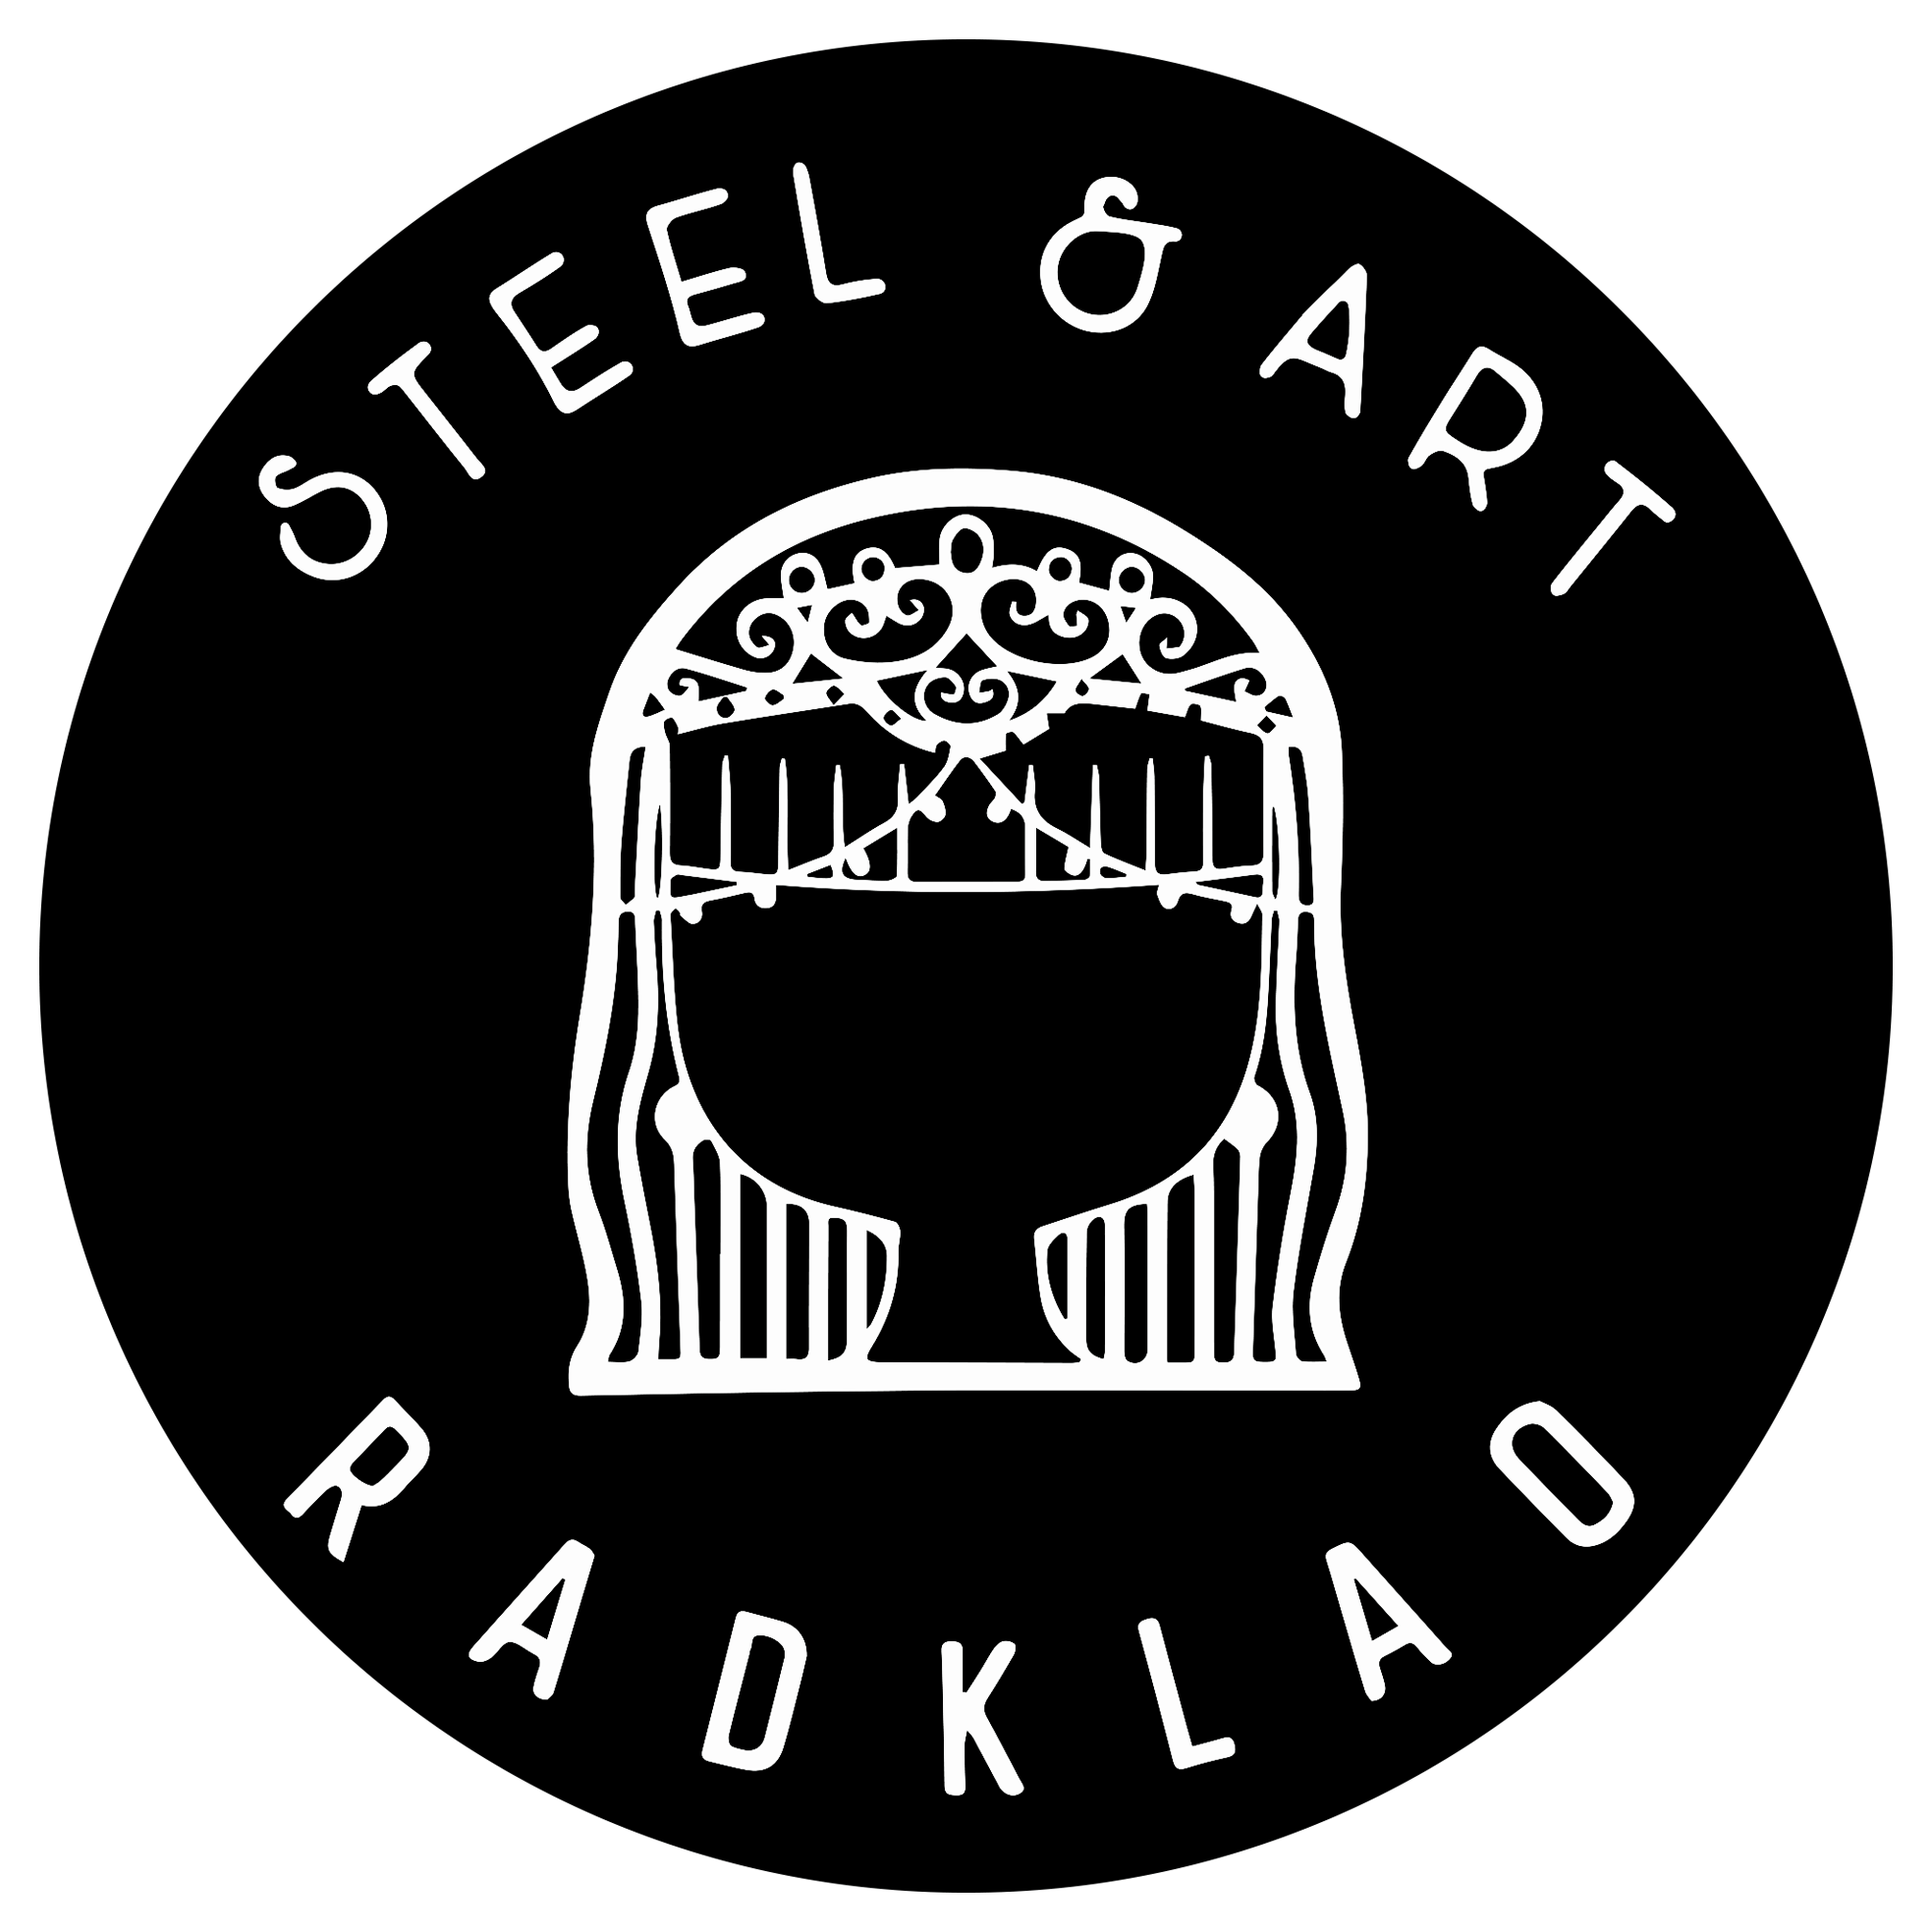 RADKLAO Steel & Art